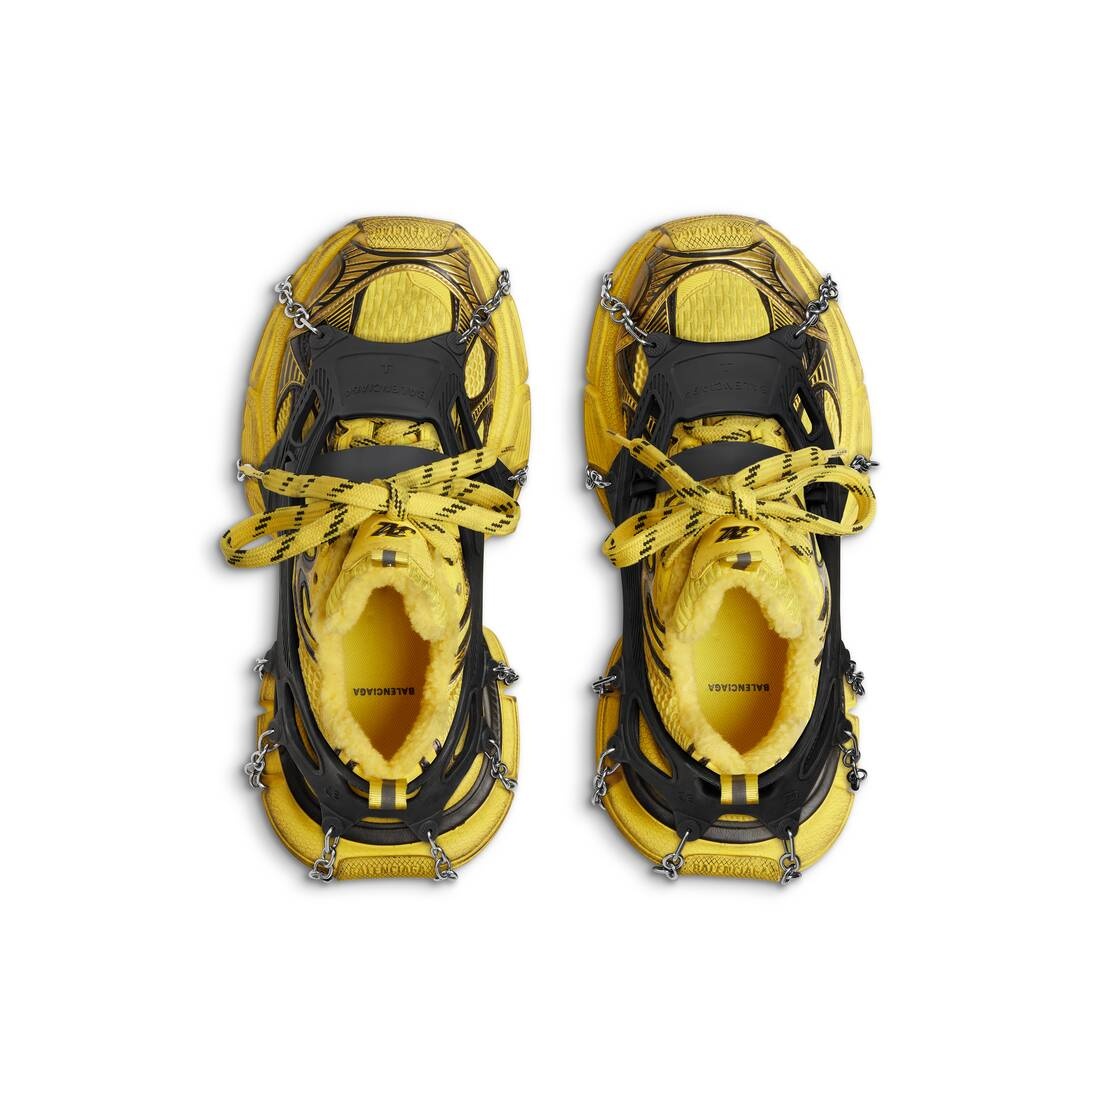 Men's Skiwear - 3xl Ski Sneaker in Yellow/black - 6